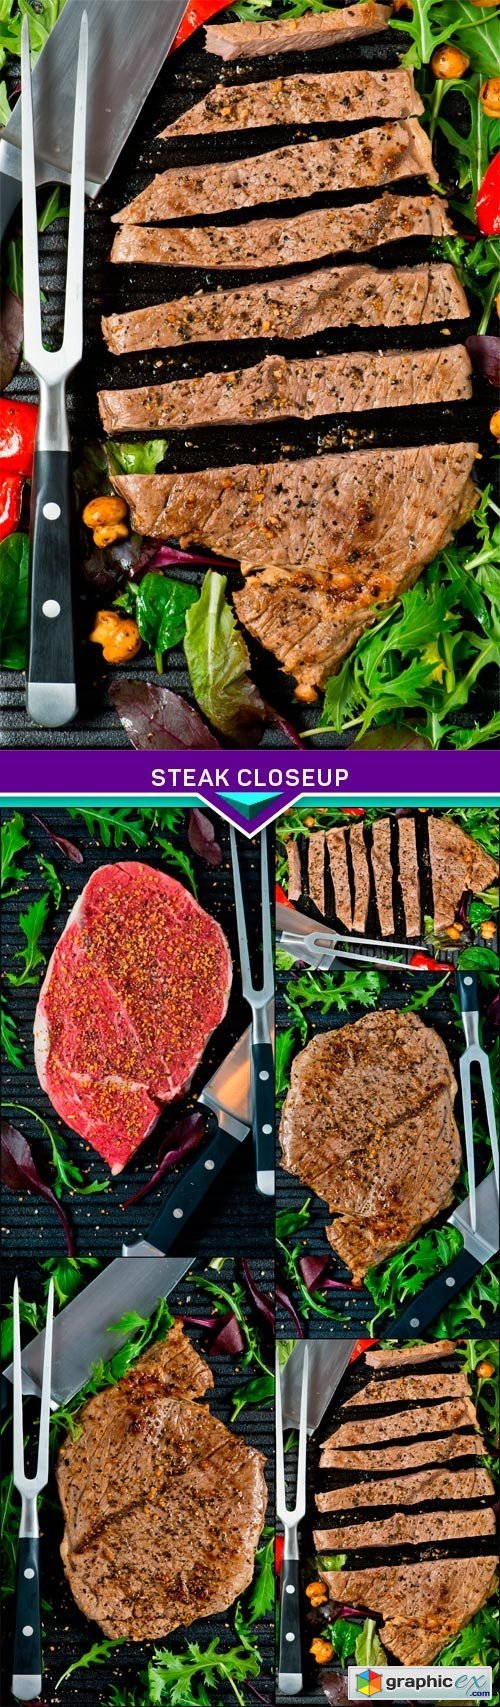 Steak closeup 5x JPEG